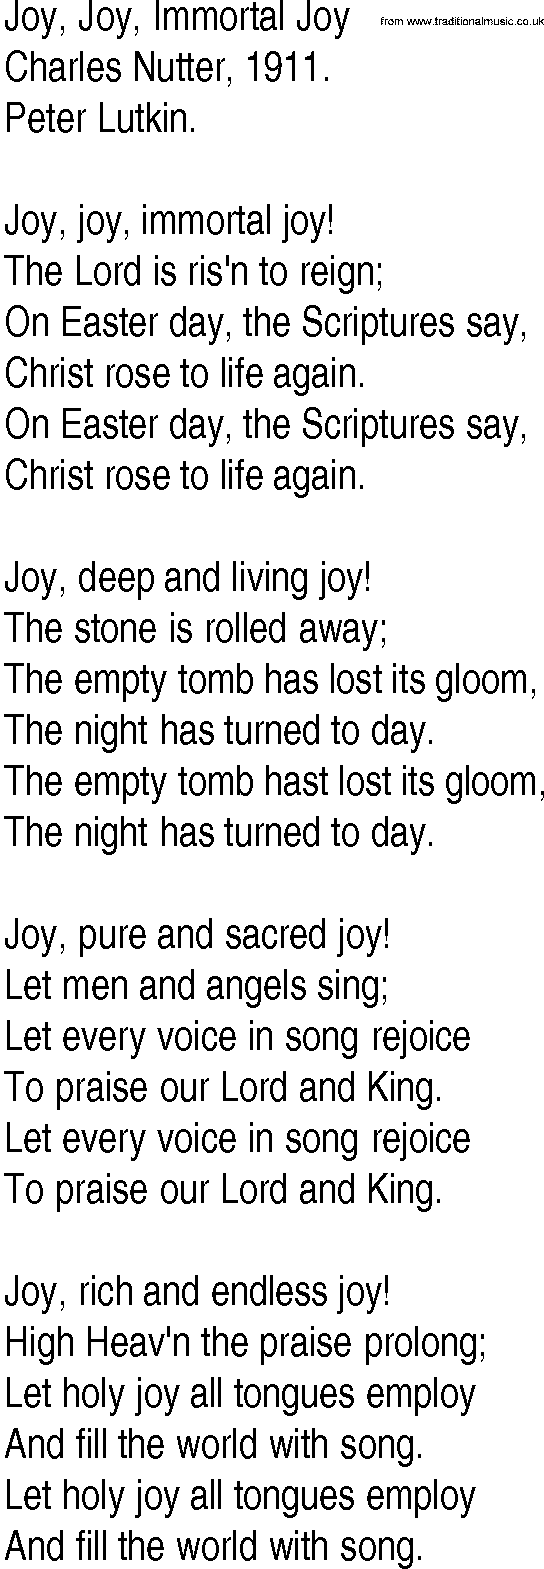 Hymn and Gospel Song: Joy, Joy, Immortal Joy by Charles Nutter lyrics